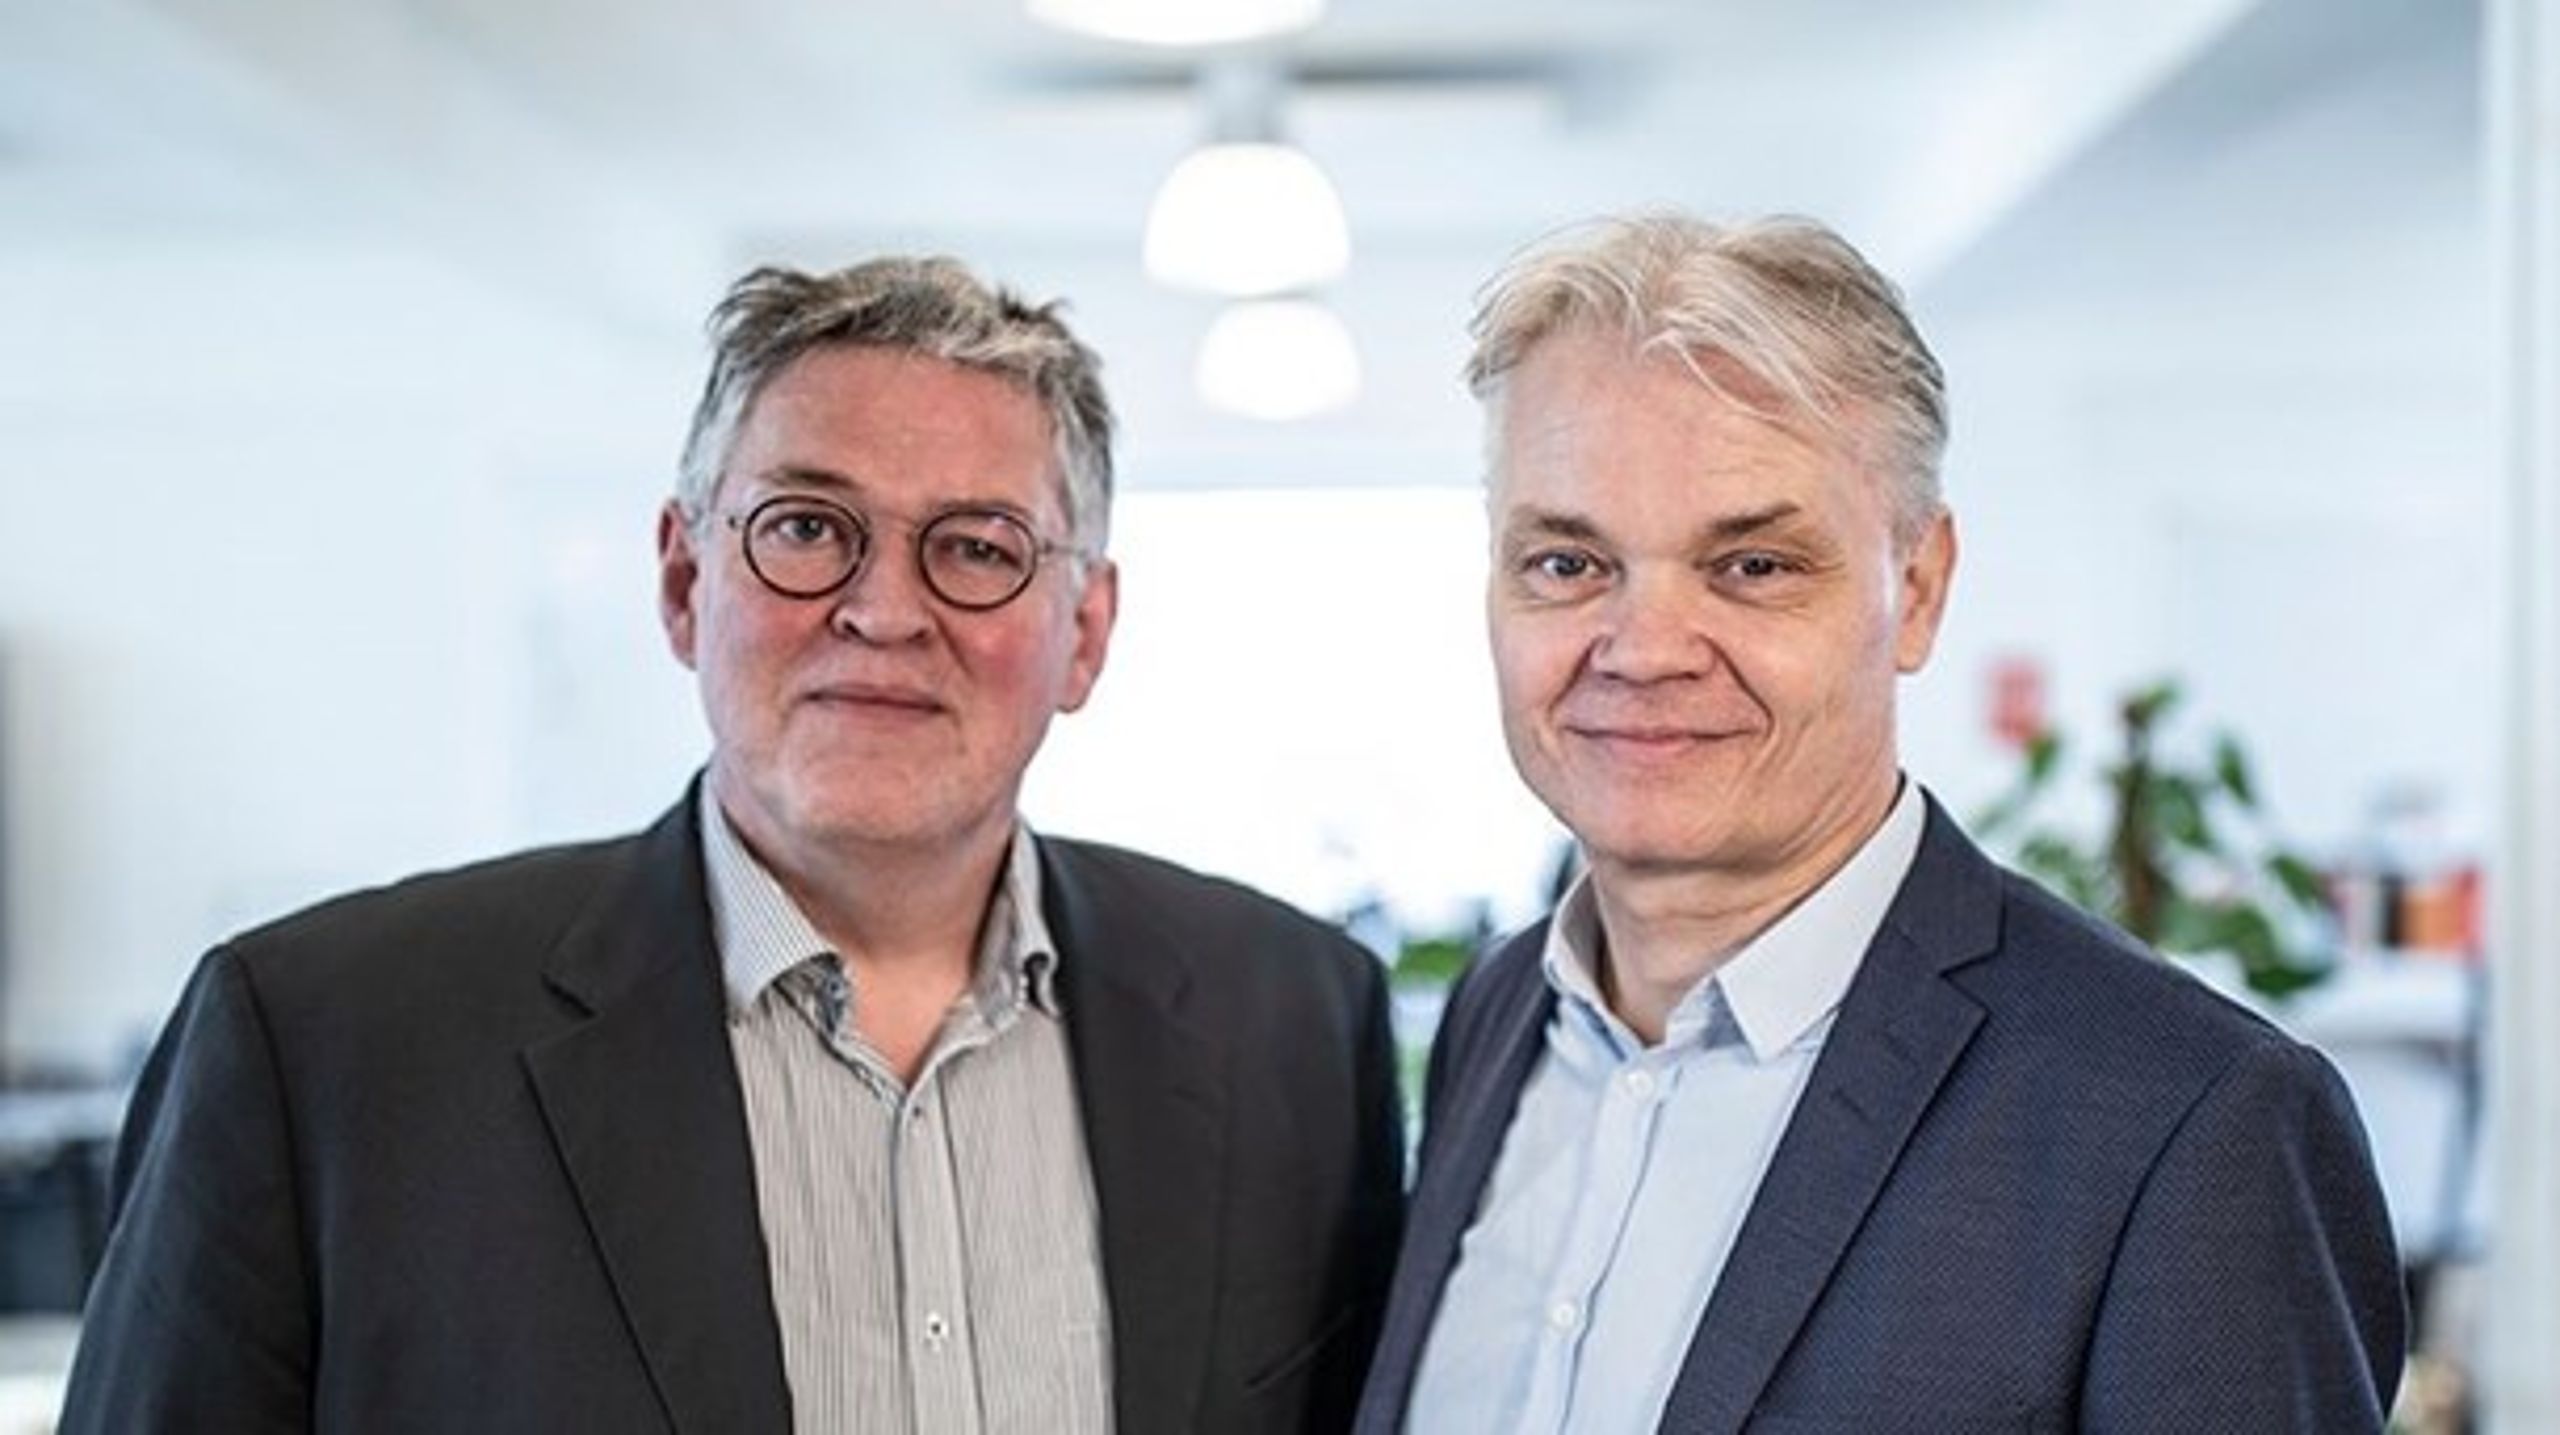 Ceveas nye ledelse: Andreas Sonne Nørgaard og Per Michael Jespersen.